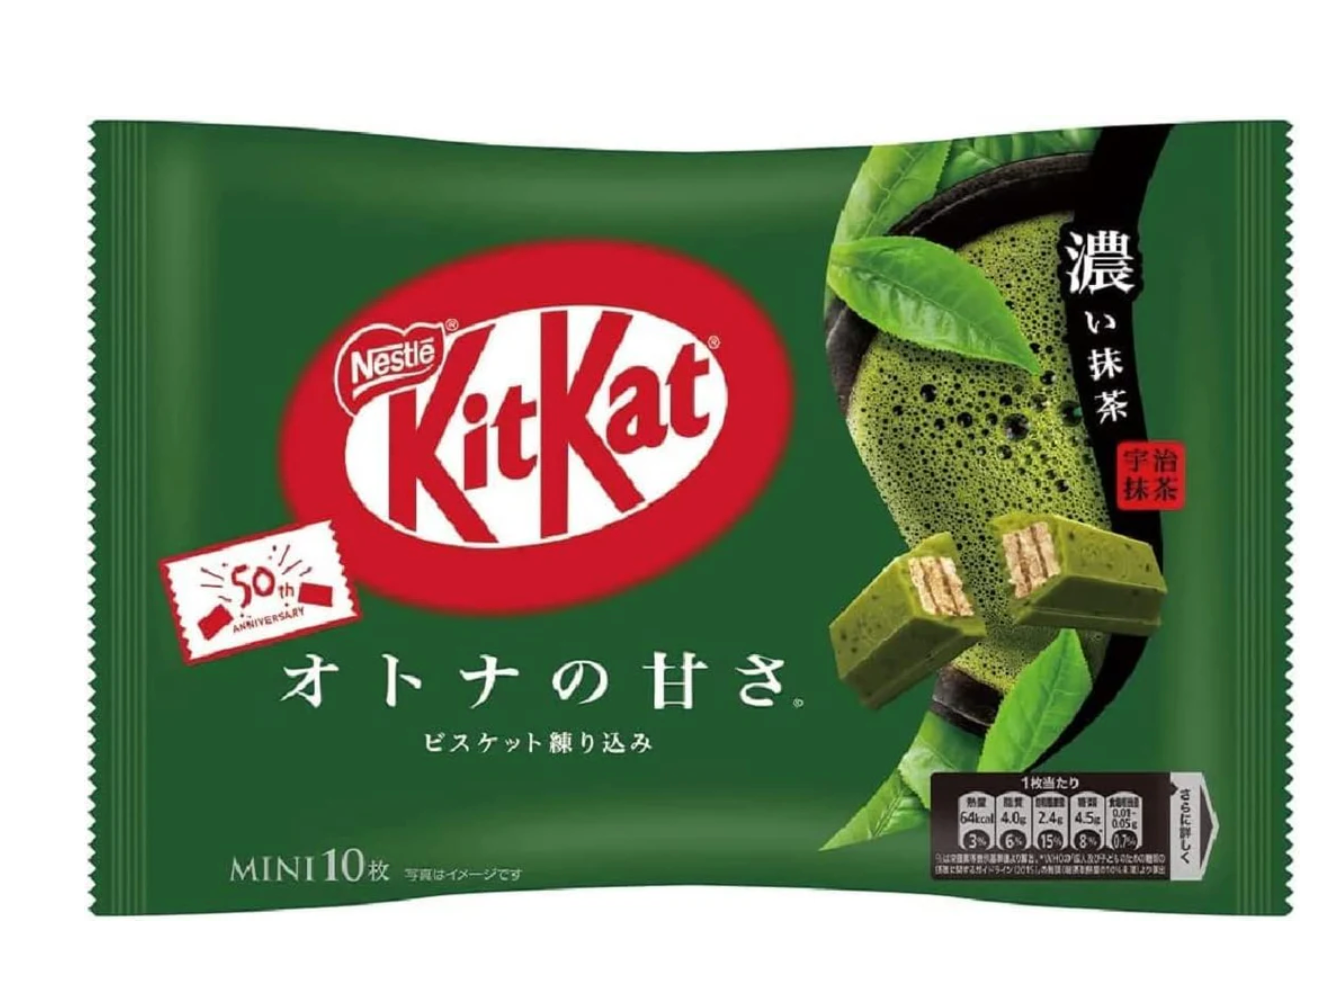 Limited KitKat Double Matcha Japan